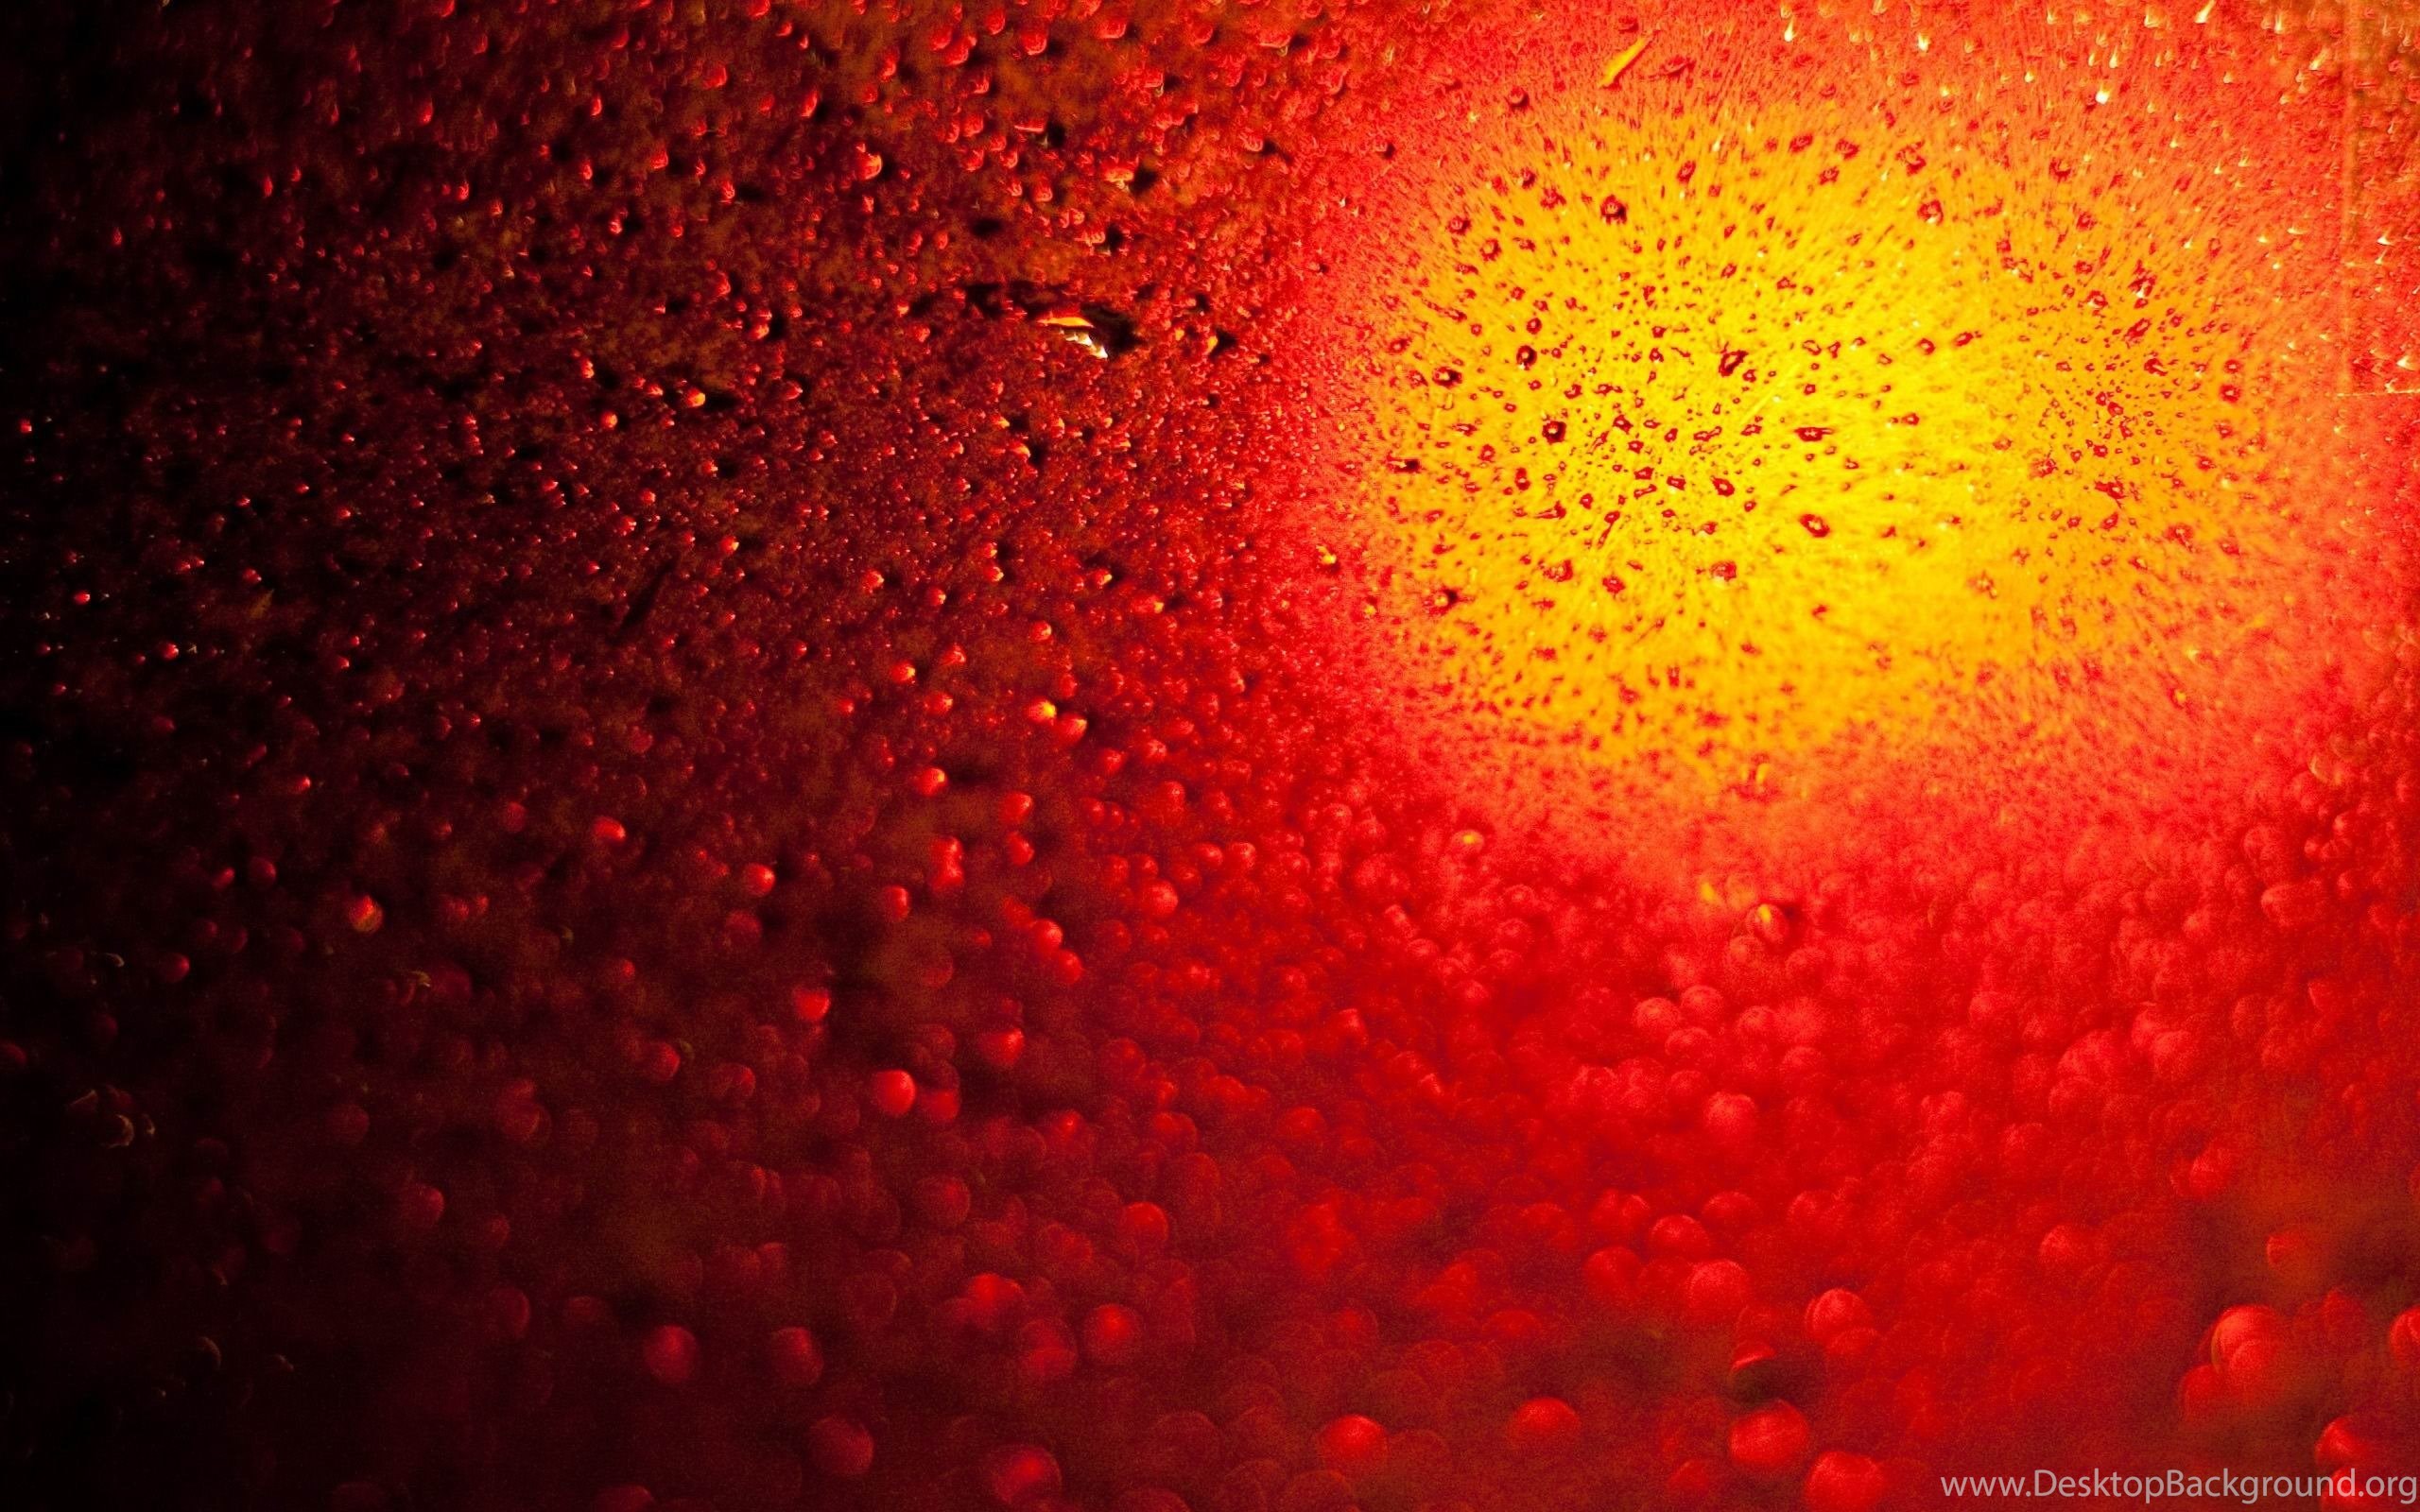 Red Water Drops Water Theme Desktop Wallpapers 2560x1600 Desktop Background